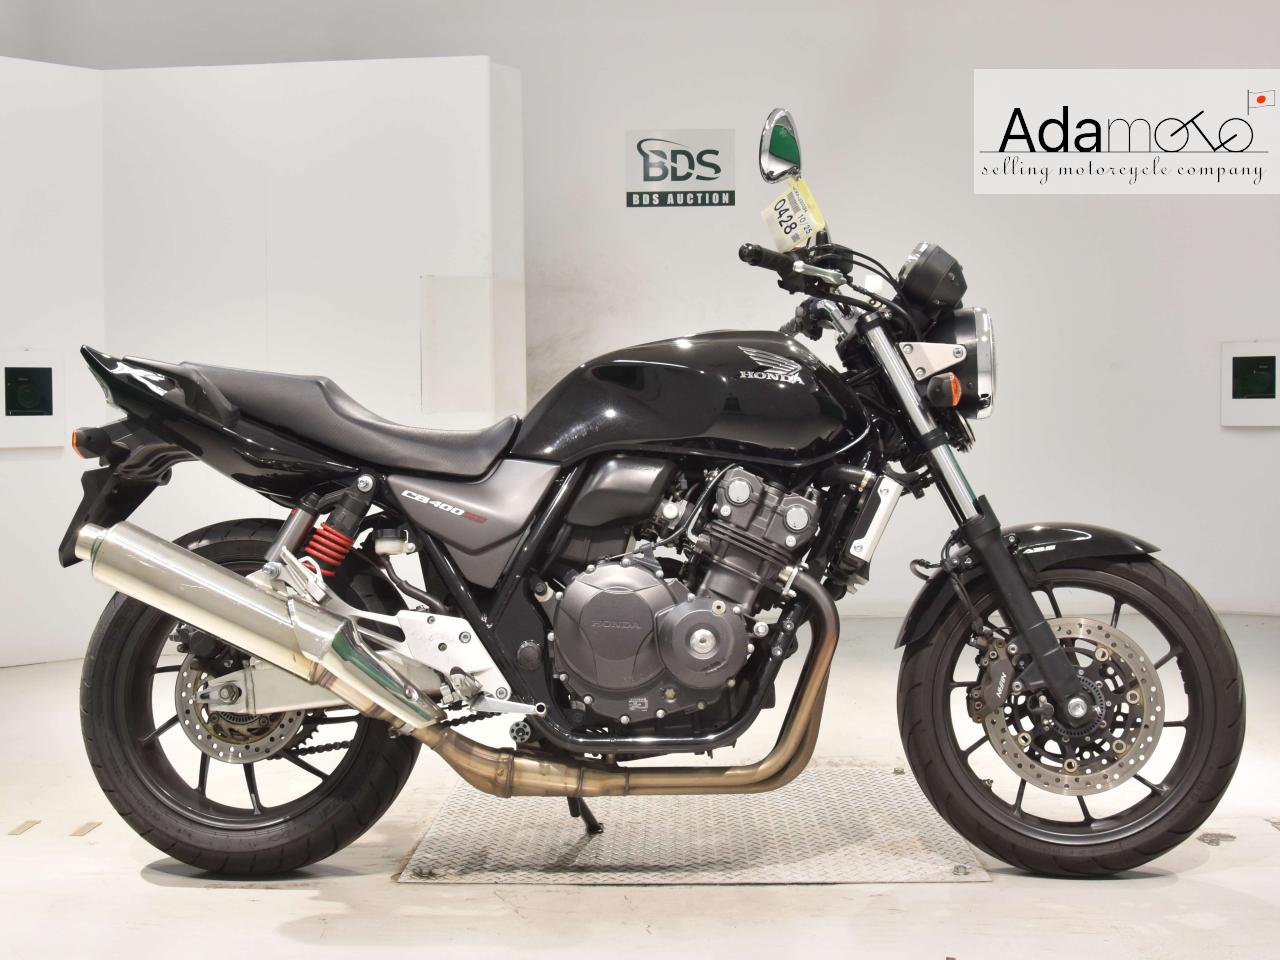 Honda CB400SF 4A - Adamoto - Motorcycles from Japan